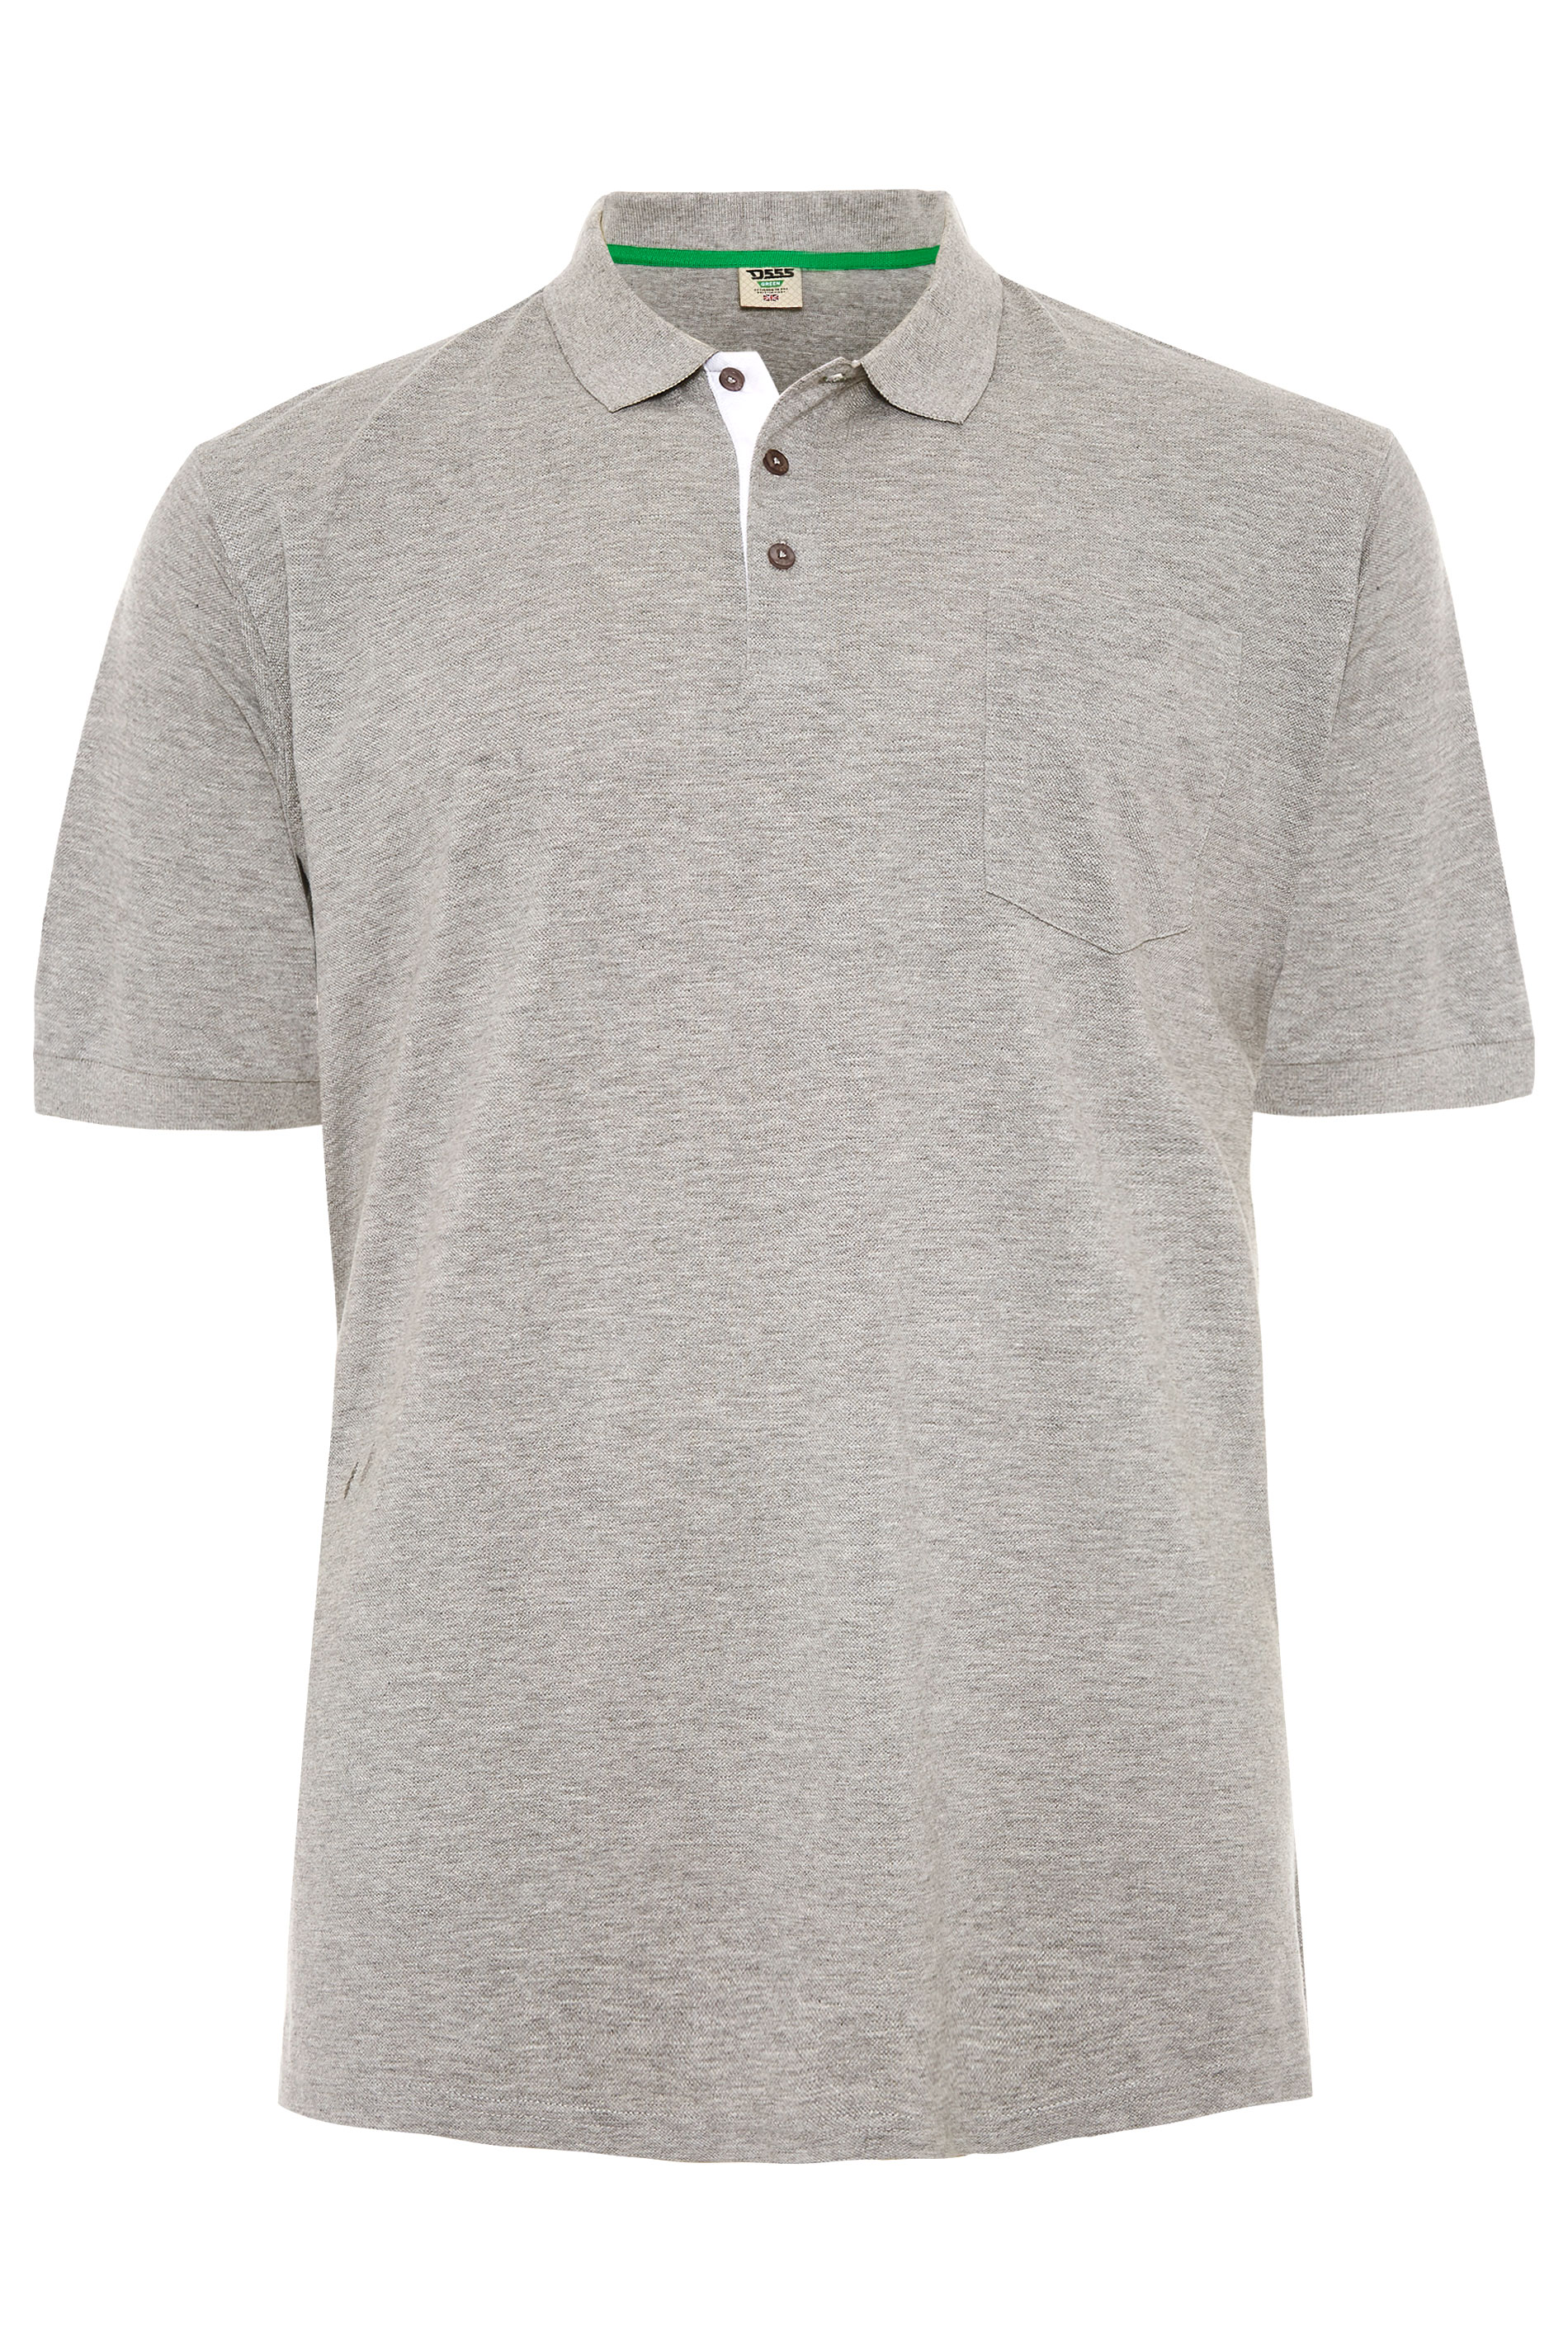 D555 Light Grey Marl Basic Polo Shirt | BadRhino